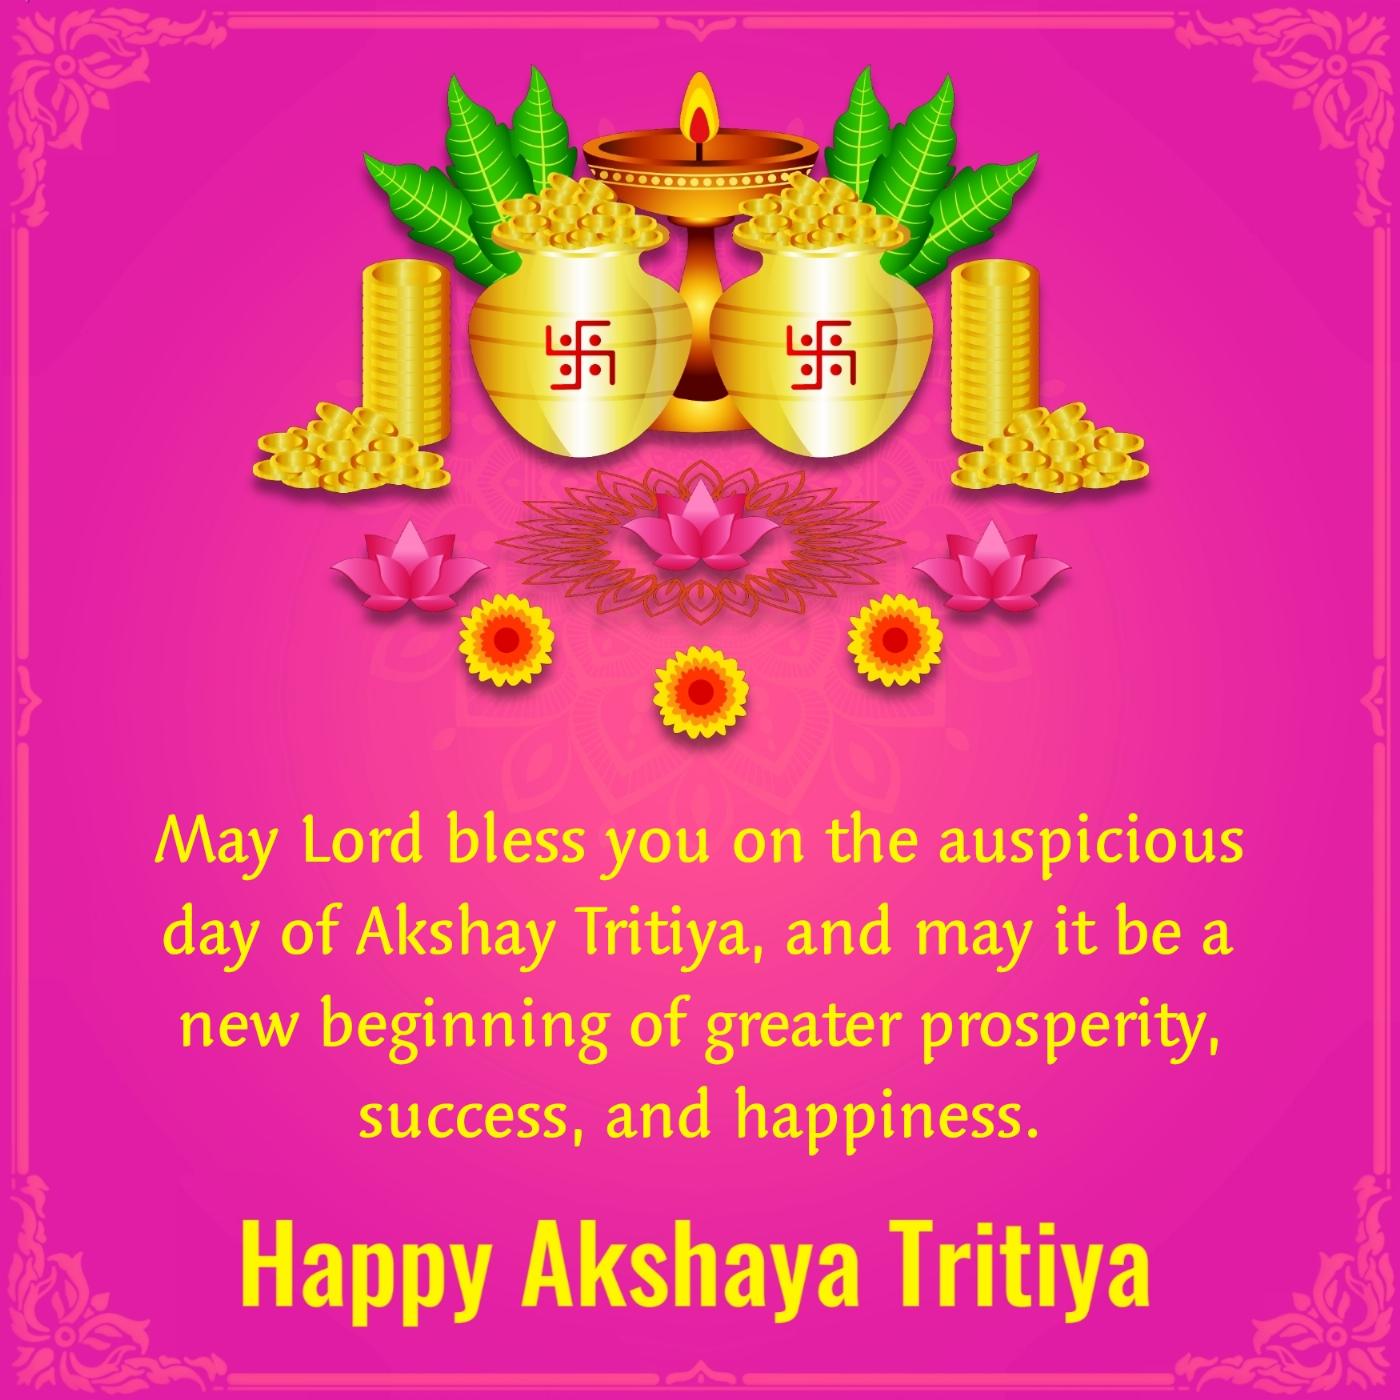 May Lord bless you on this auspicious day of Akshaya Tritiya and may it be